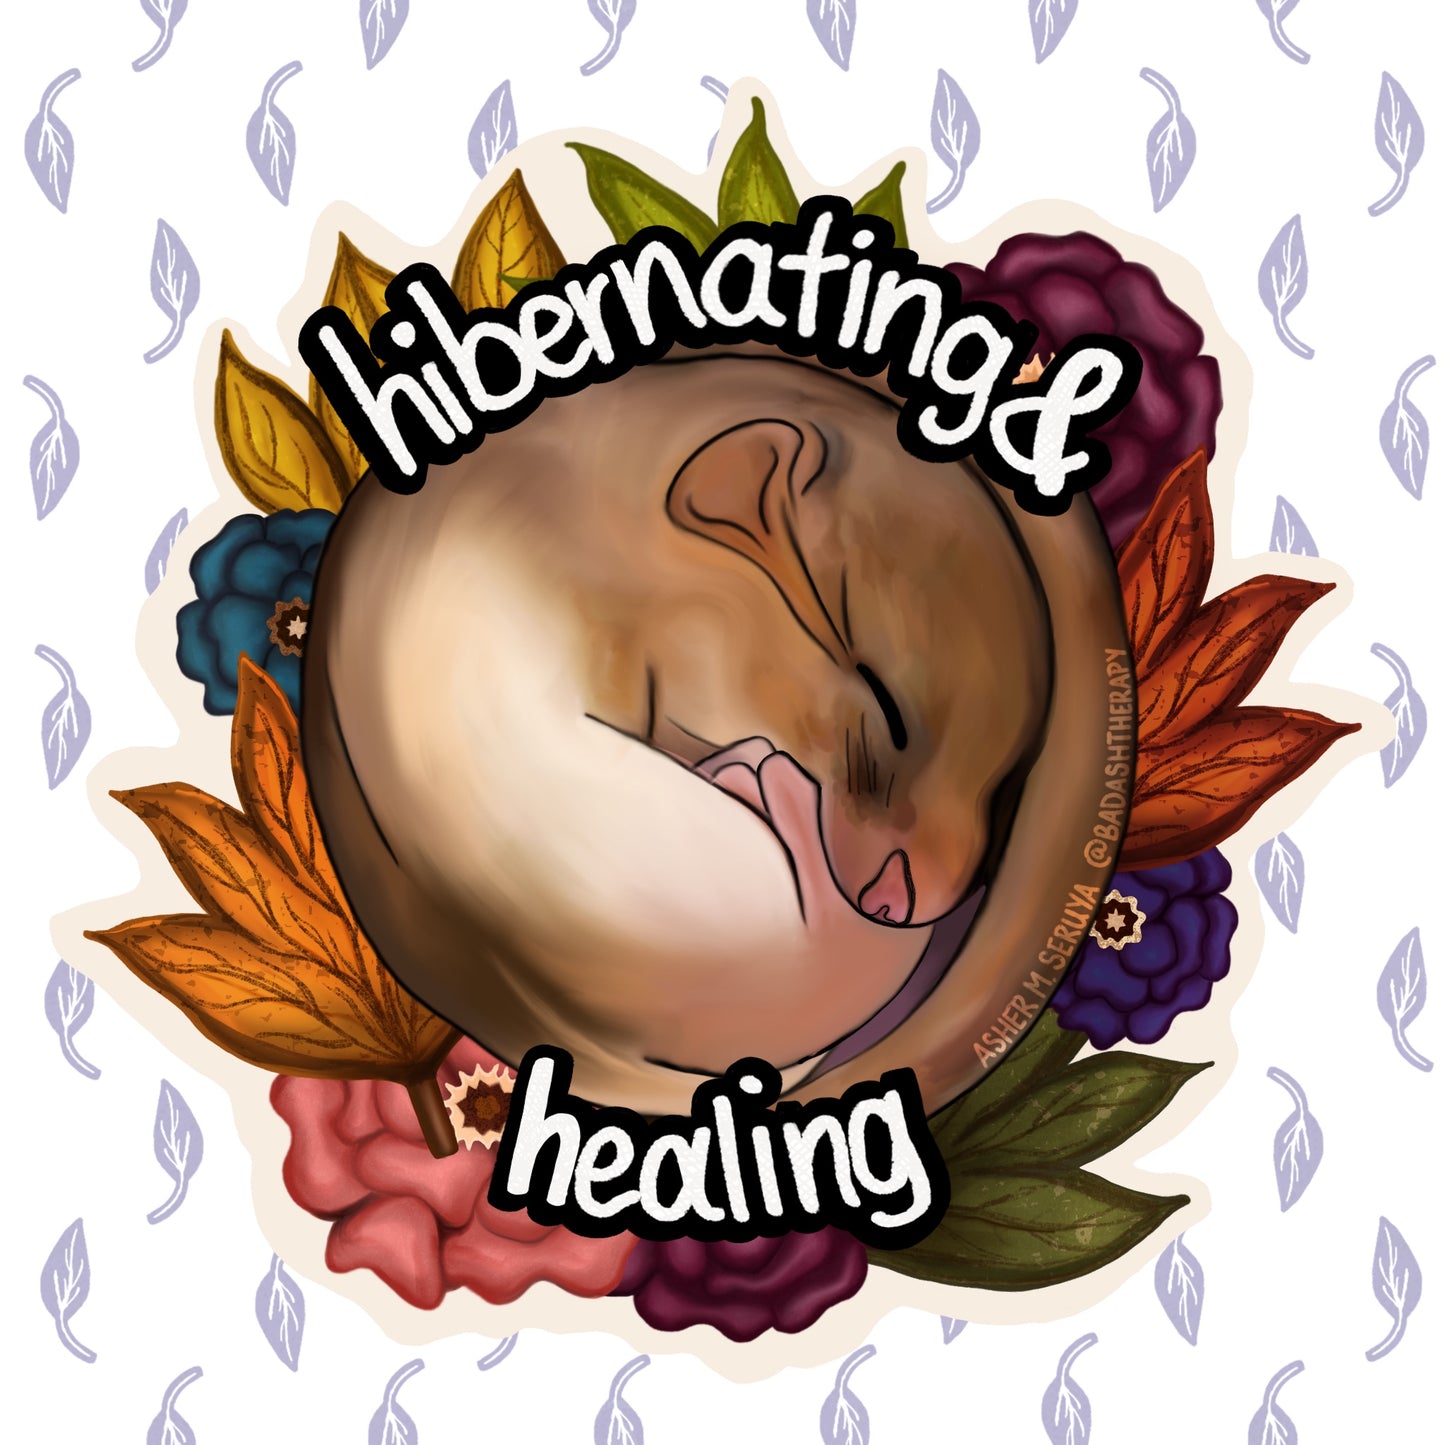 Hibernating & Healing - Art & Illustration